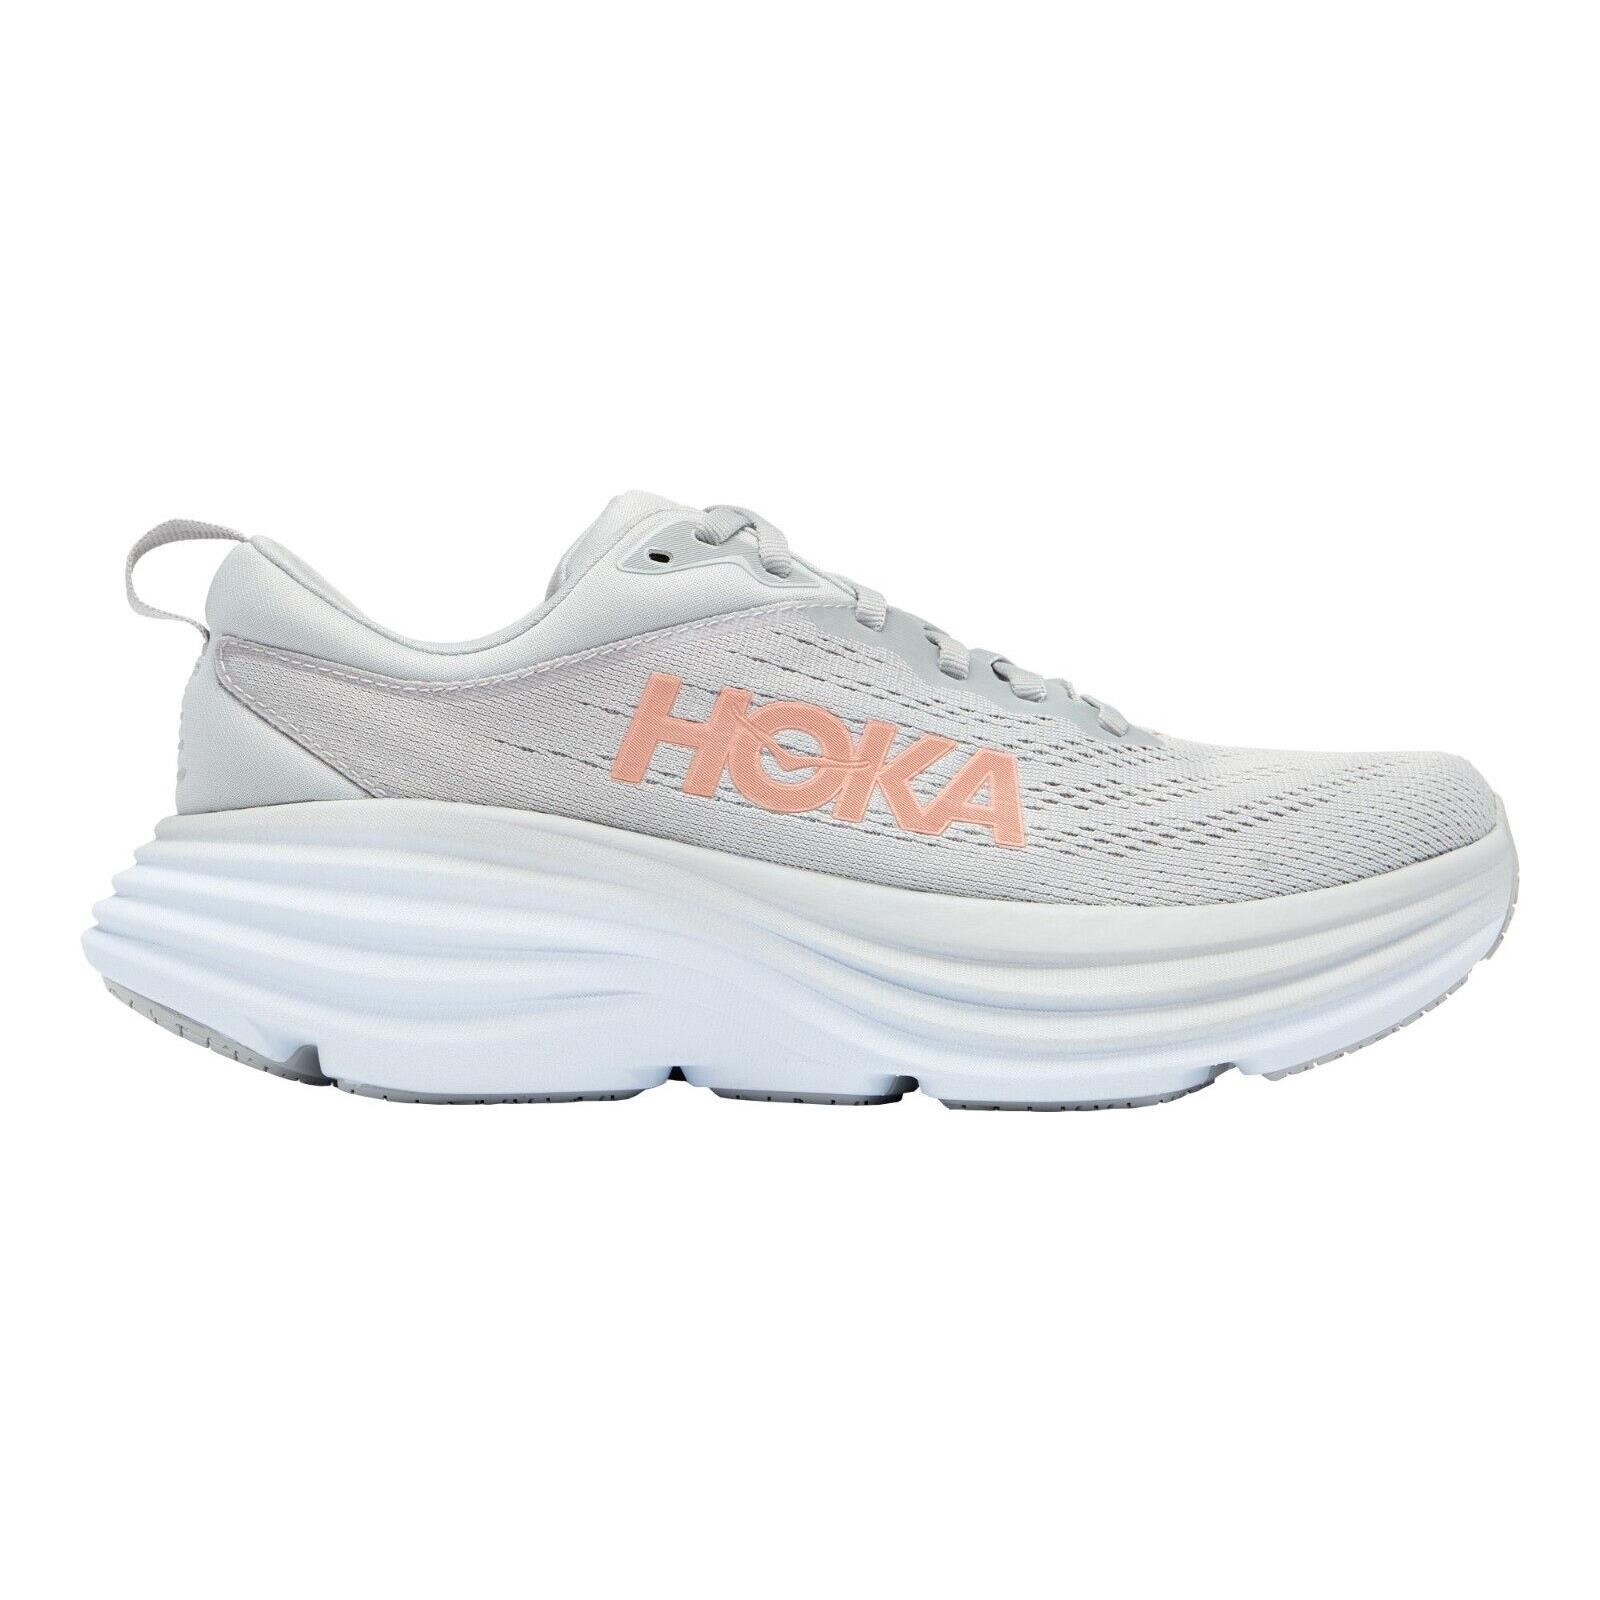 Hoka One One Bondi 8 Running Shoes Women`s US Sizes 6-12 Colors Available Harbor Mist / Lunar Rock